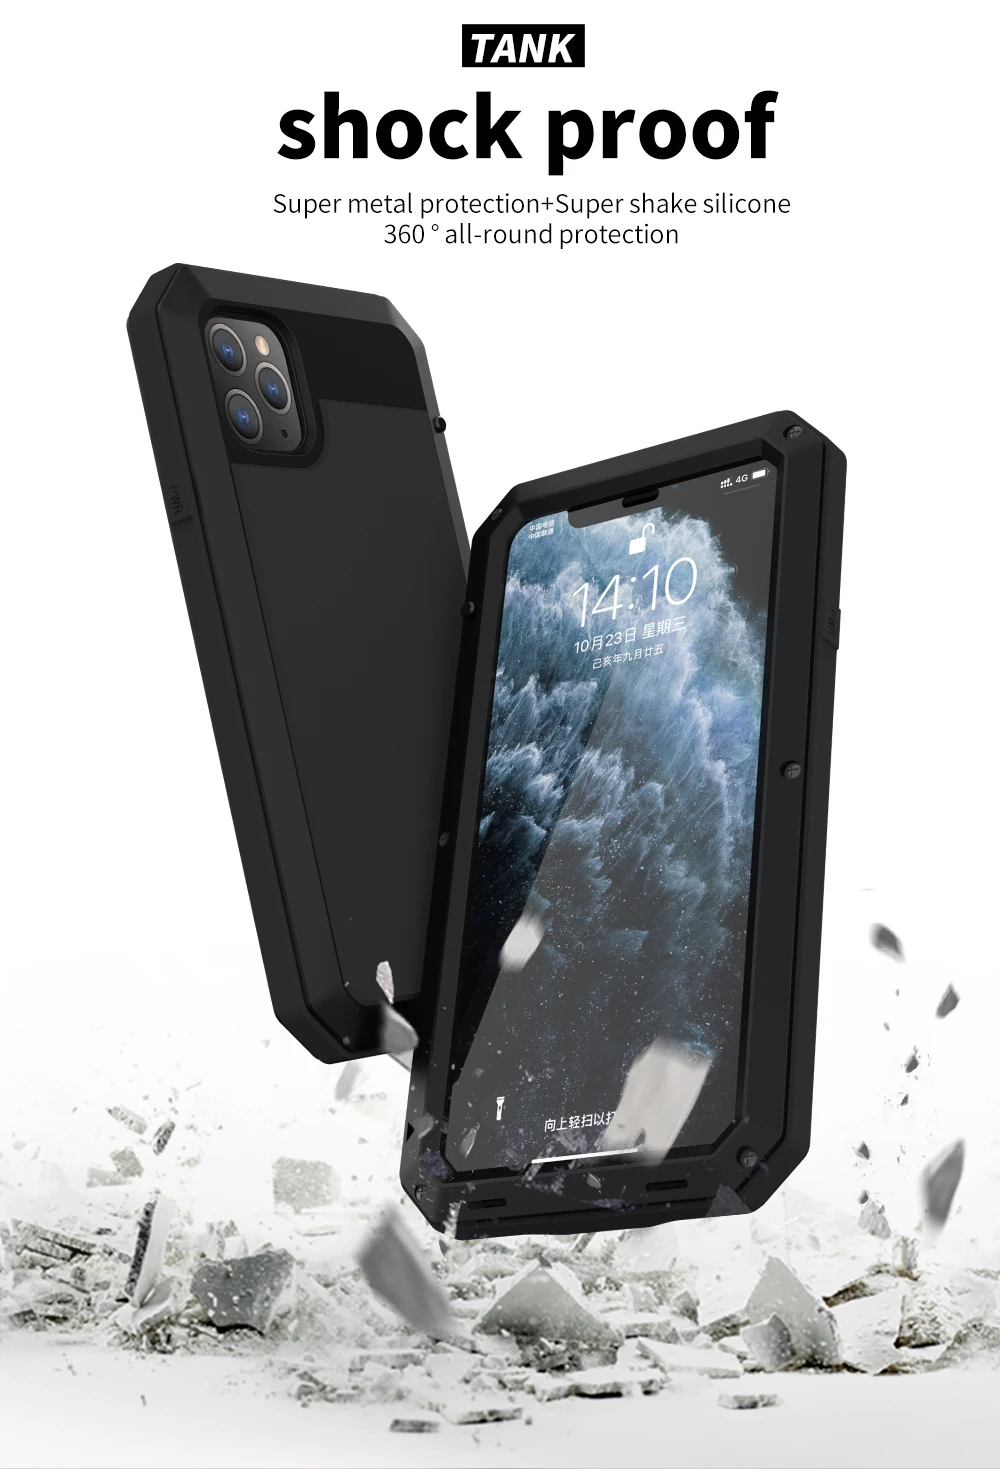 20 шт./лот, водонепроницаемый чехол, усиленная защита, металлический алюминиевый чехол для iPhone 11 Pro Max XR XS MAX 6 6S 7 8 Plus X